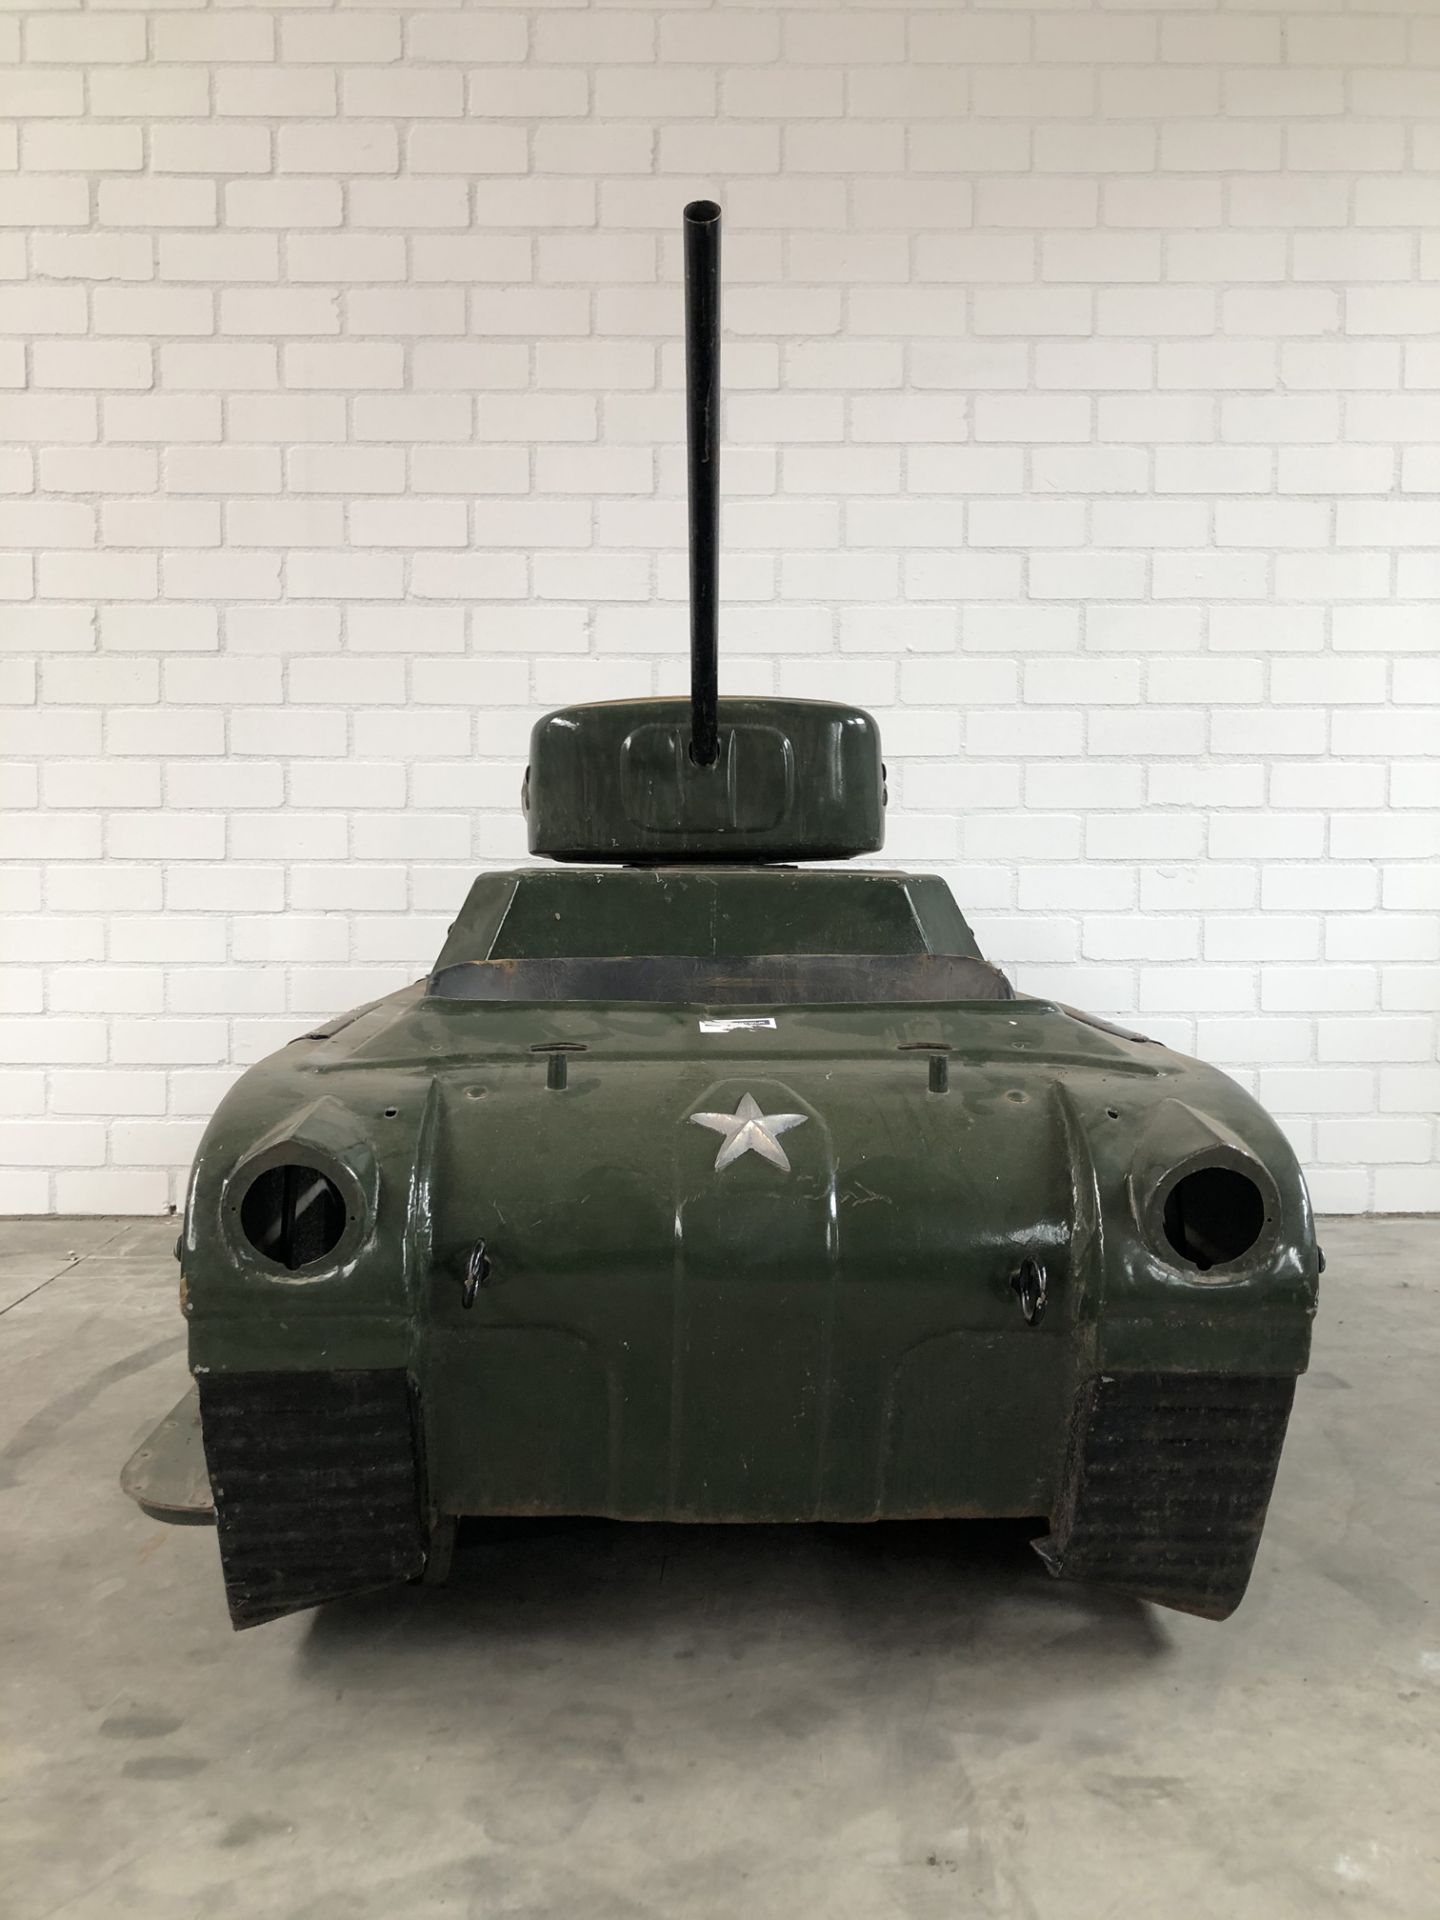 Unrestored L'Autopede Carousel Tank - Image 2 of 16